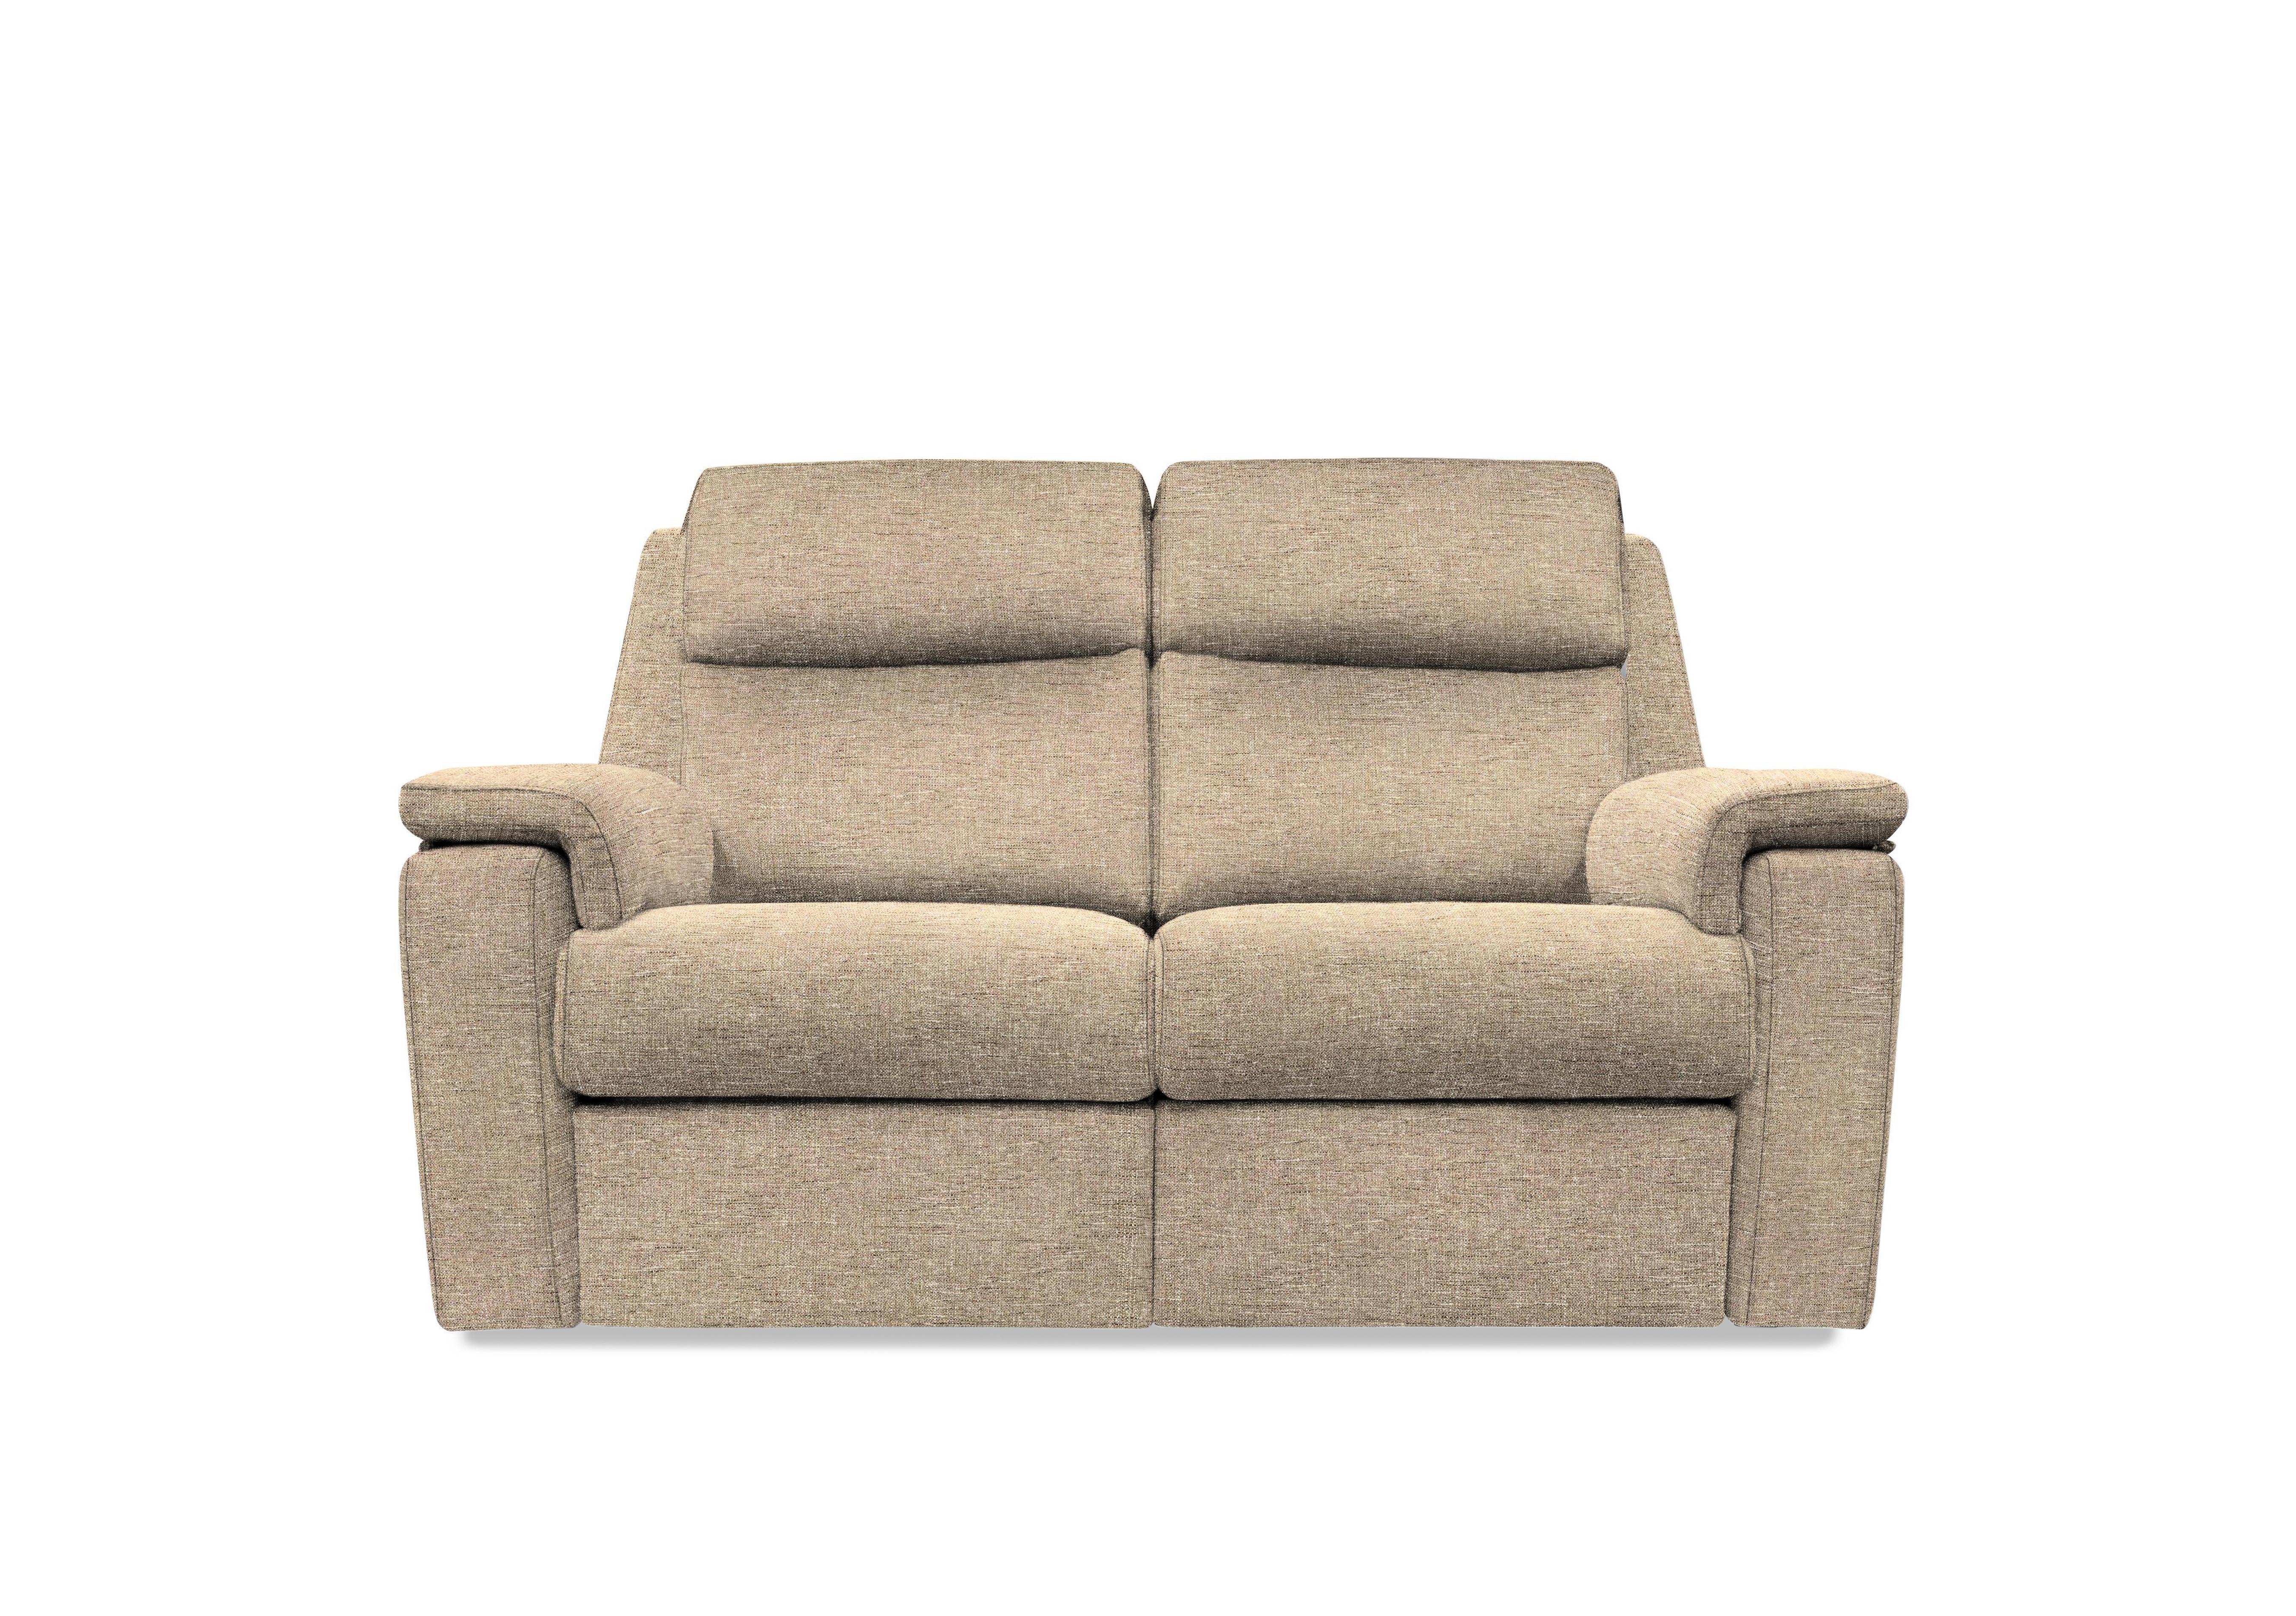 Thornbury 2 Seater Fabric Sofa in A022 Dapple Sparrow on Furniture Village